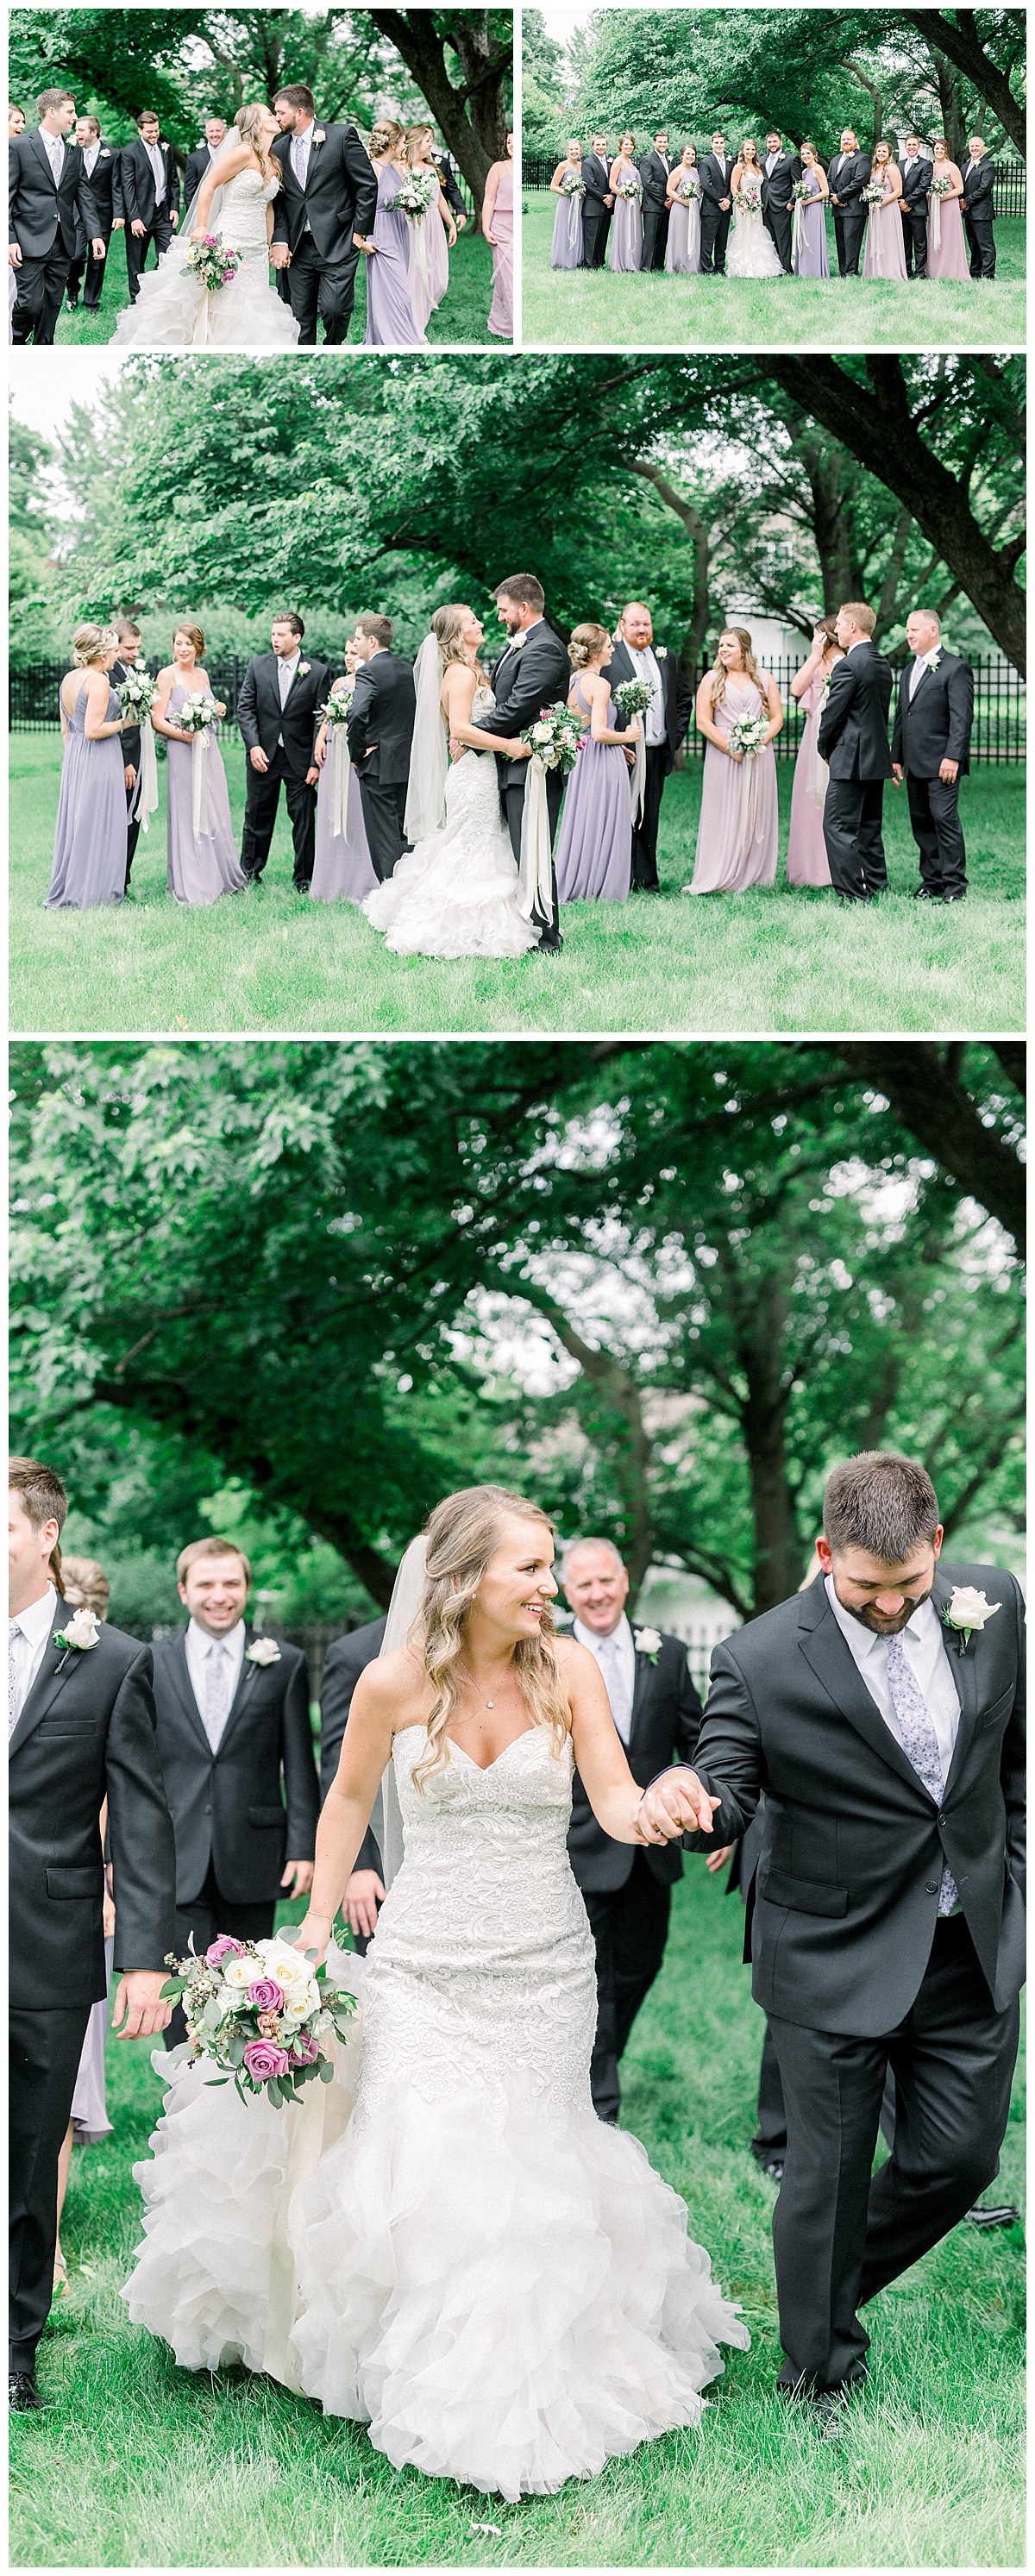 TPC Deere Run Wedding | Moline Photographer | Sarah Sunstrom Photography | www.sarahsunstromphotography.com_0011.jpg